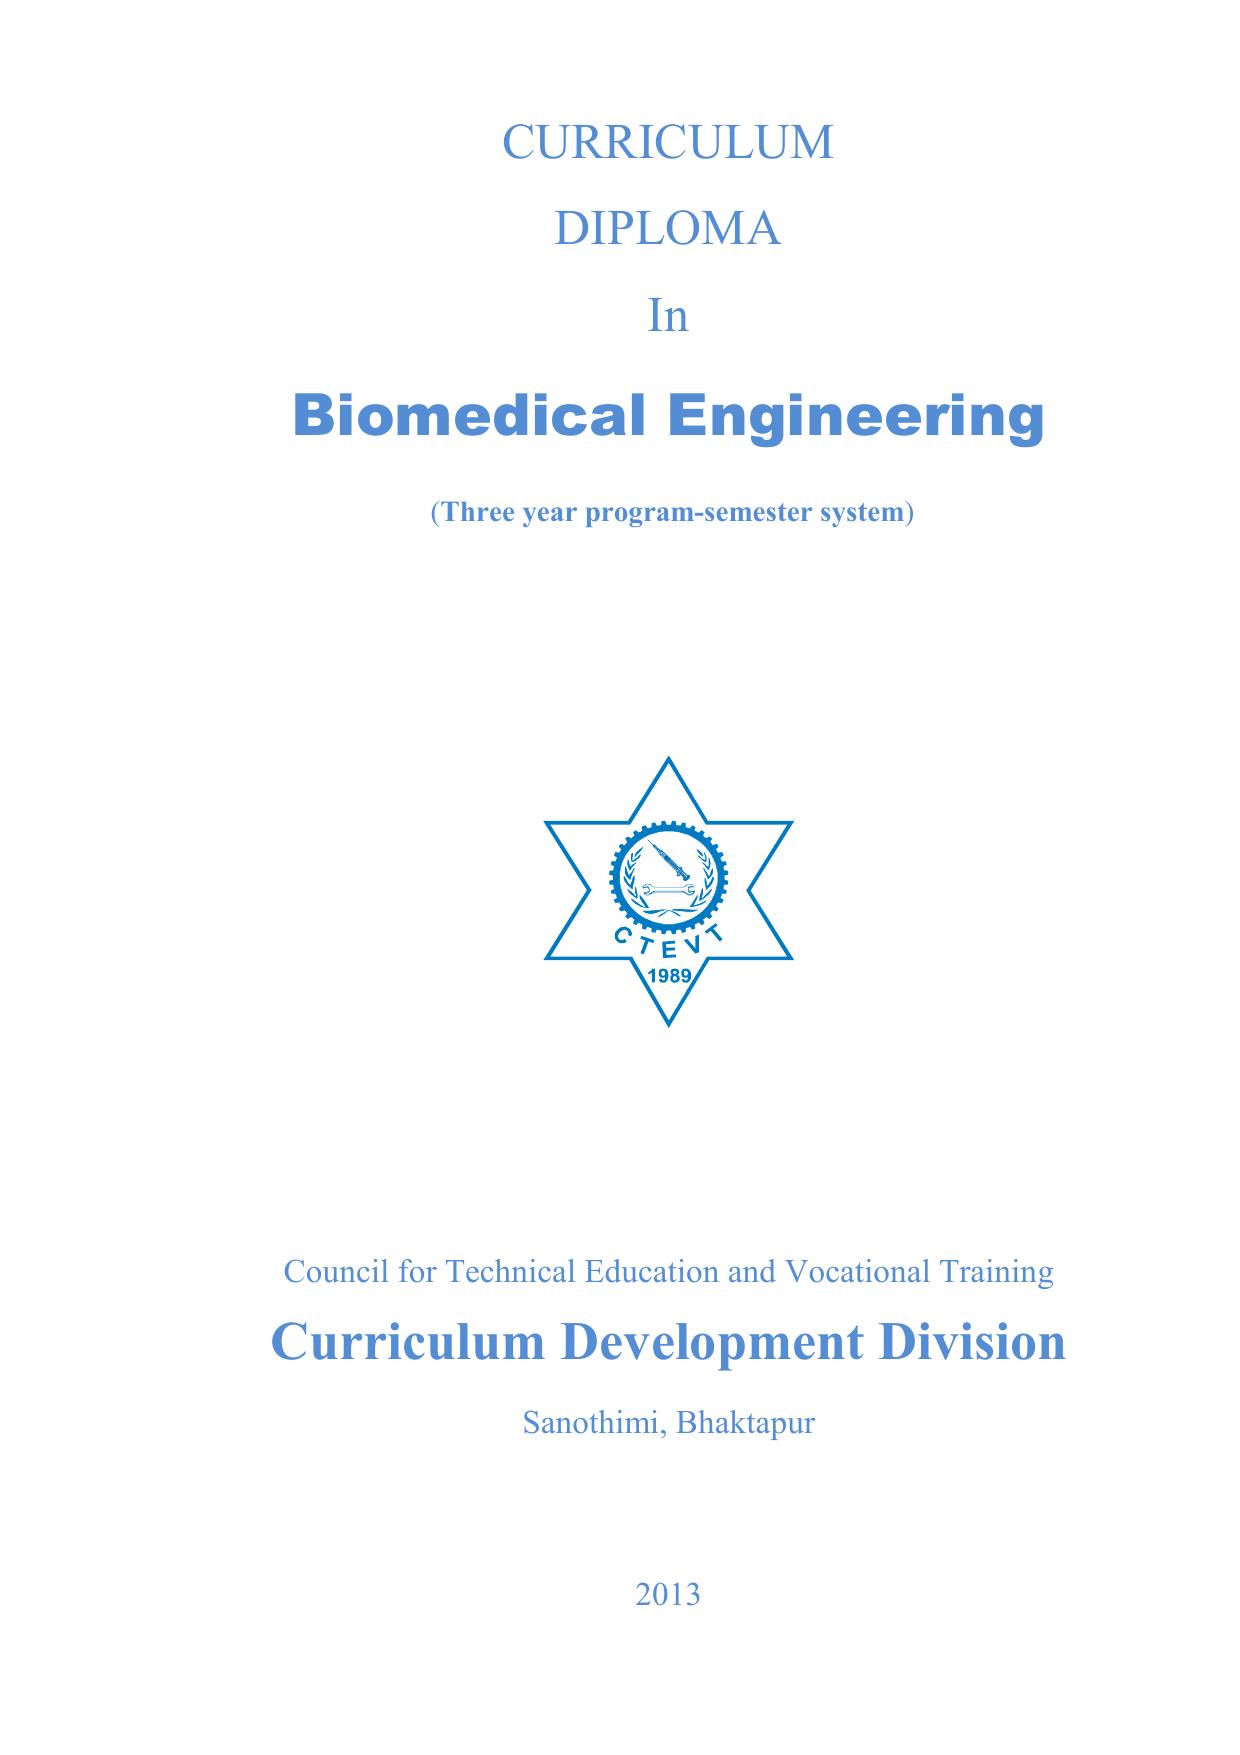 Diploma in Biomedical Engineering, 2013